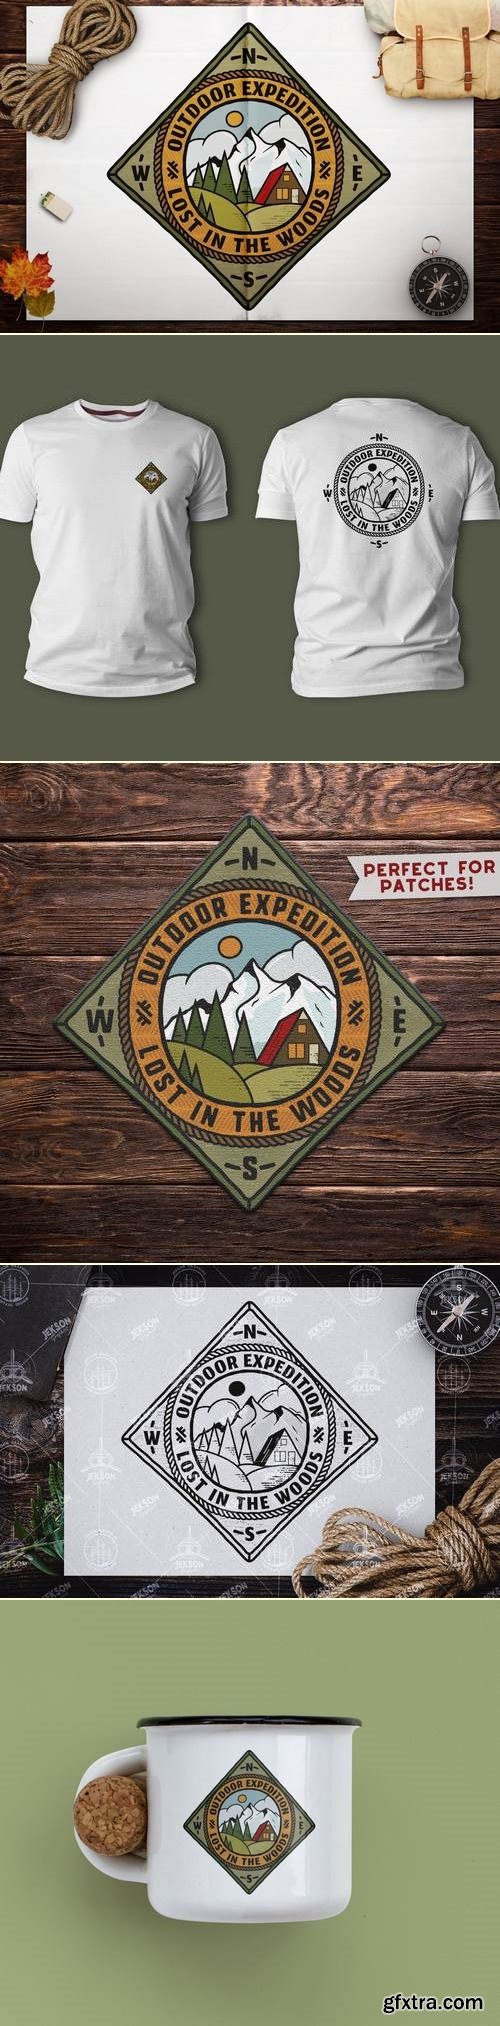 Retro Travel Emblem / Vintage Camping Logo / Patch